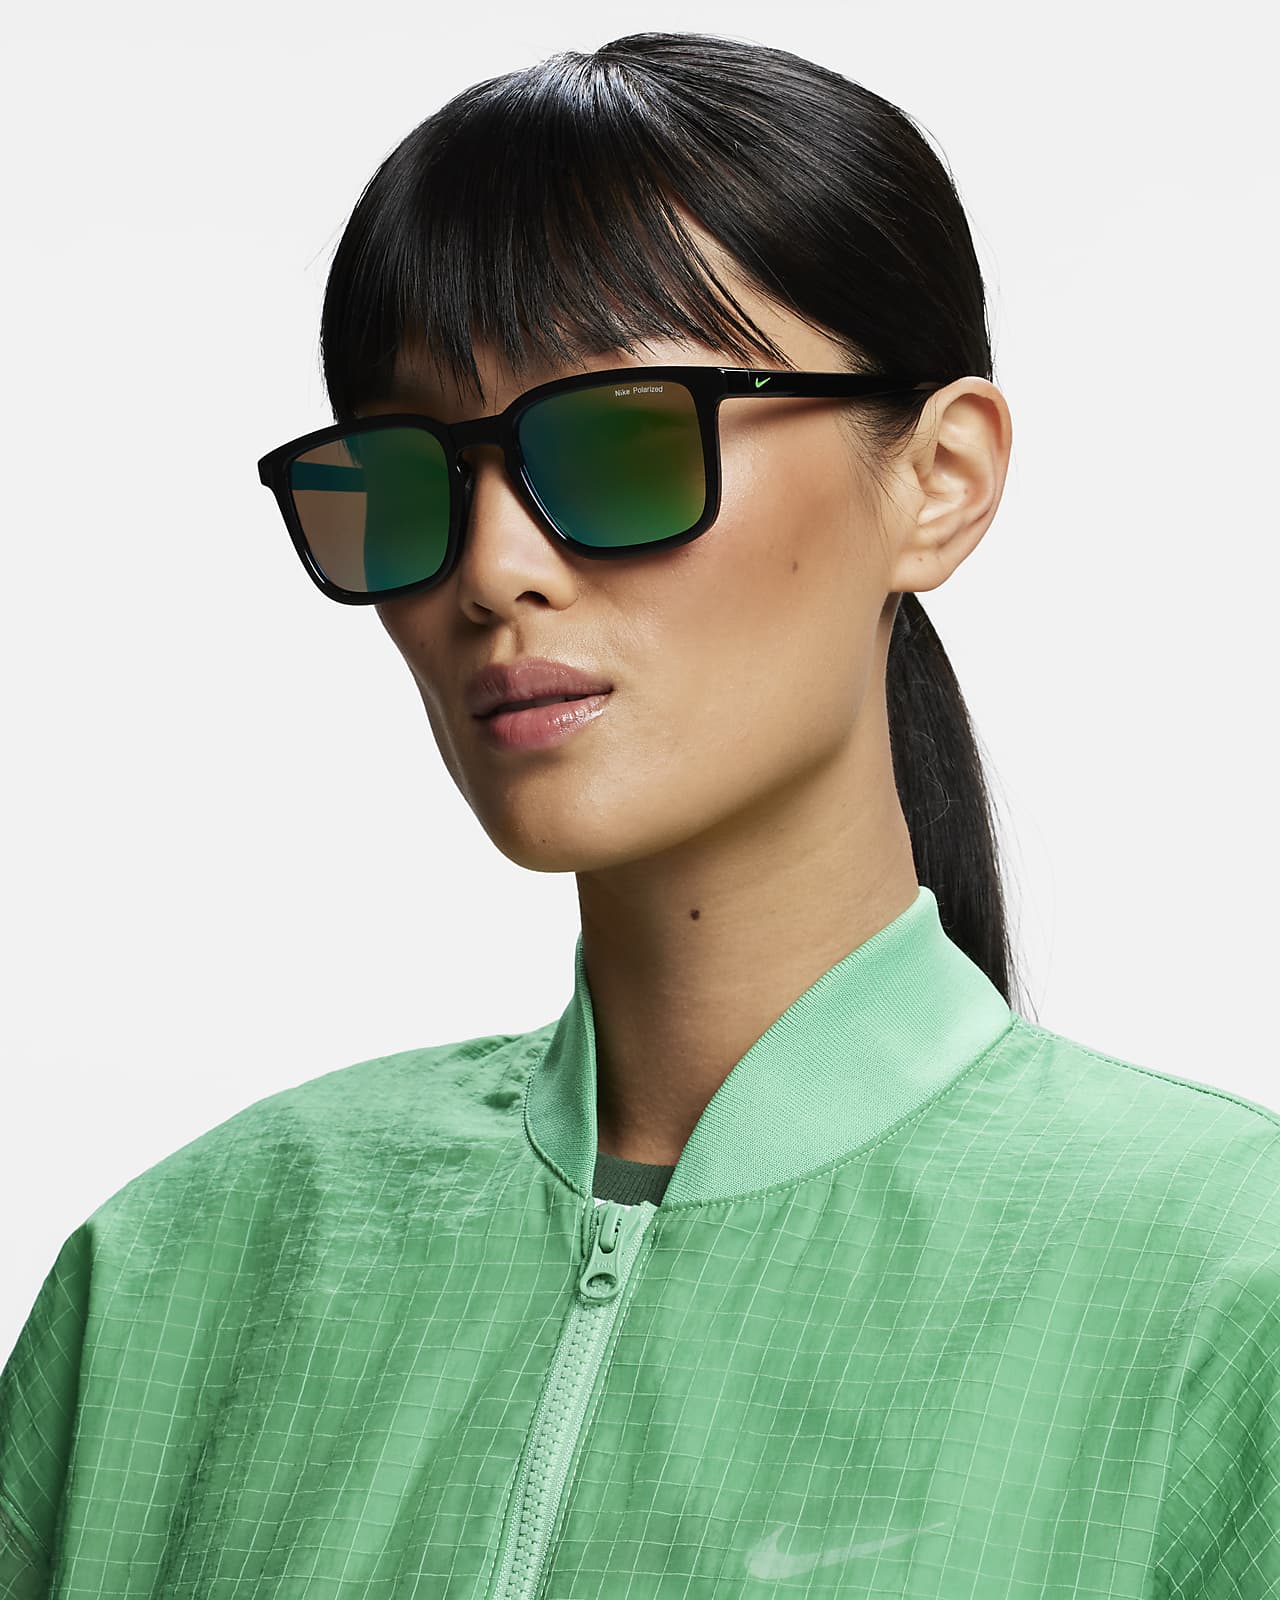 Polarized Sunglasses Explained - Why, How, When - Tifosi Optics-nextbuild.com.vn